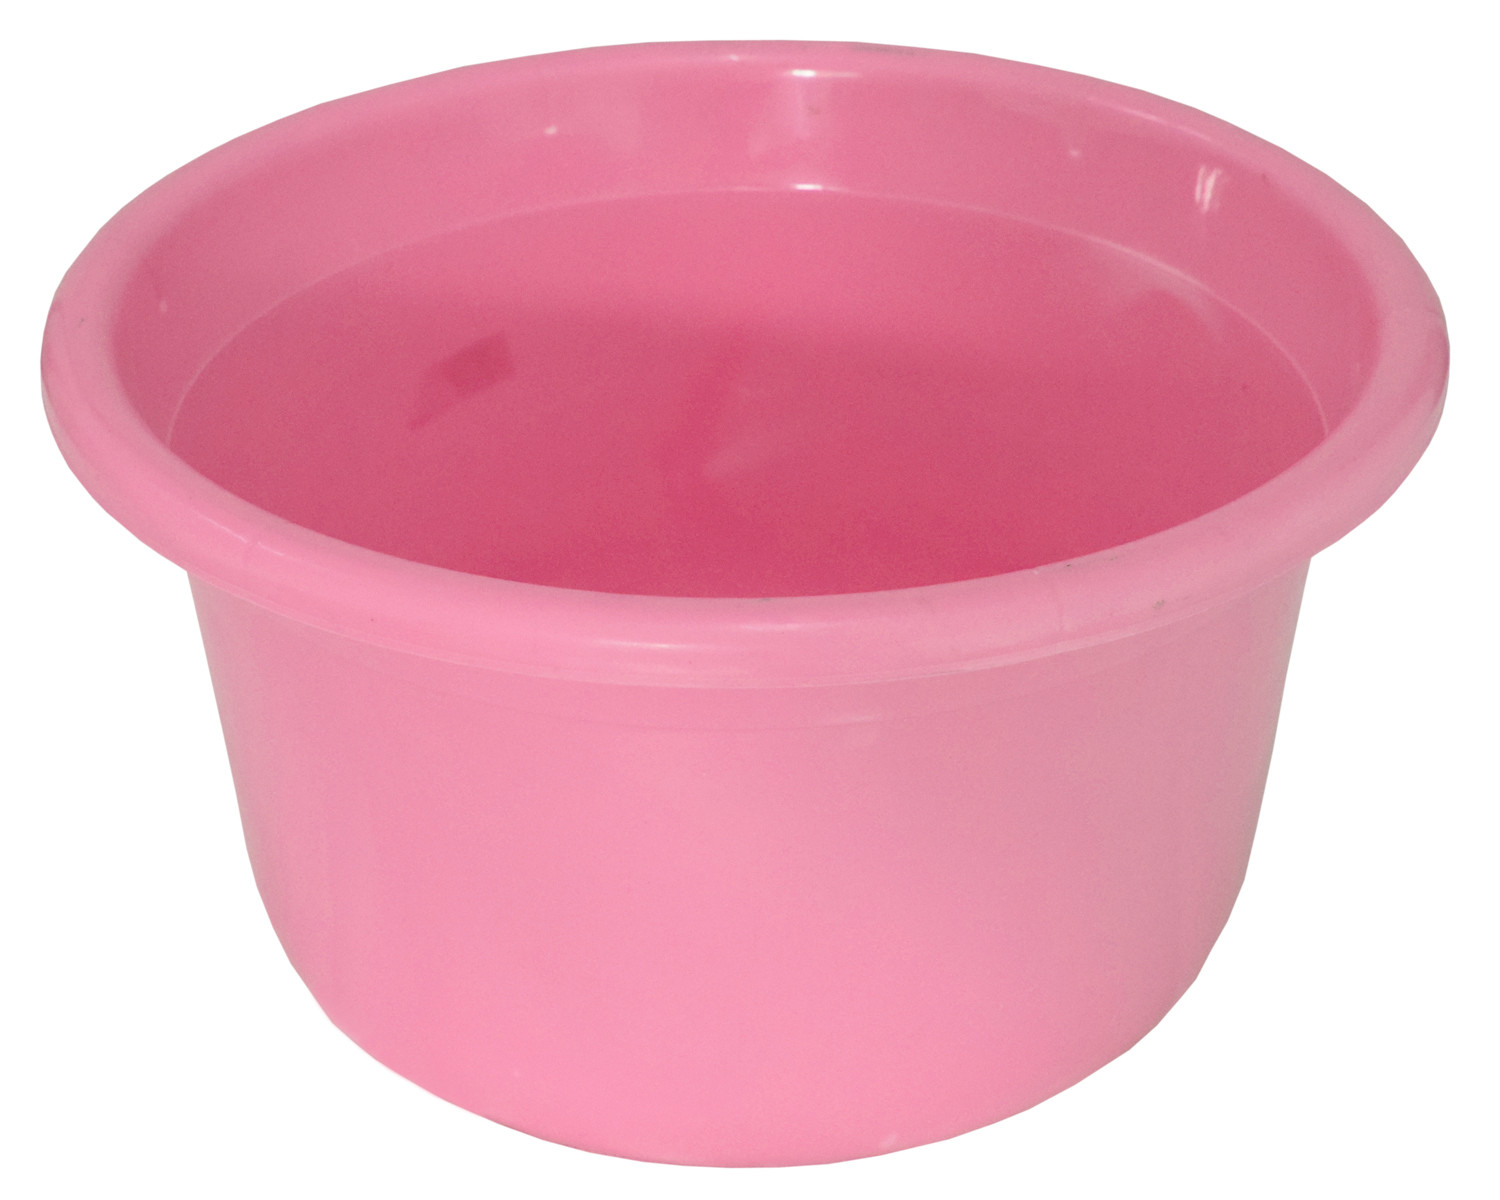 Kuber Industries 2 Pieces Unbreakable Virgin Plastic Multipurpose Bathroom Tub & Stool Set (Pink)